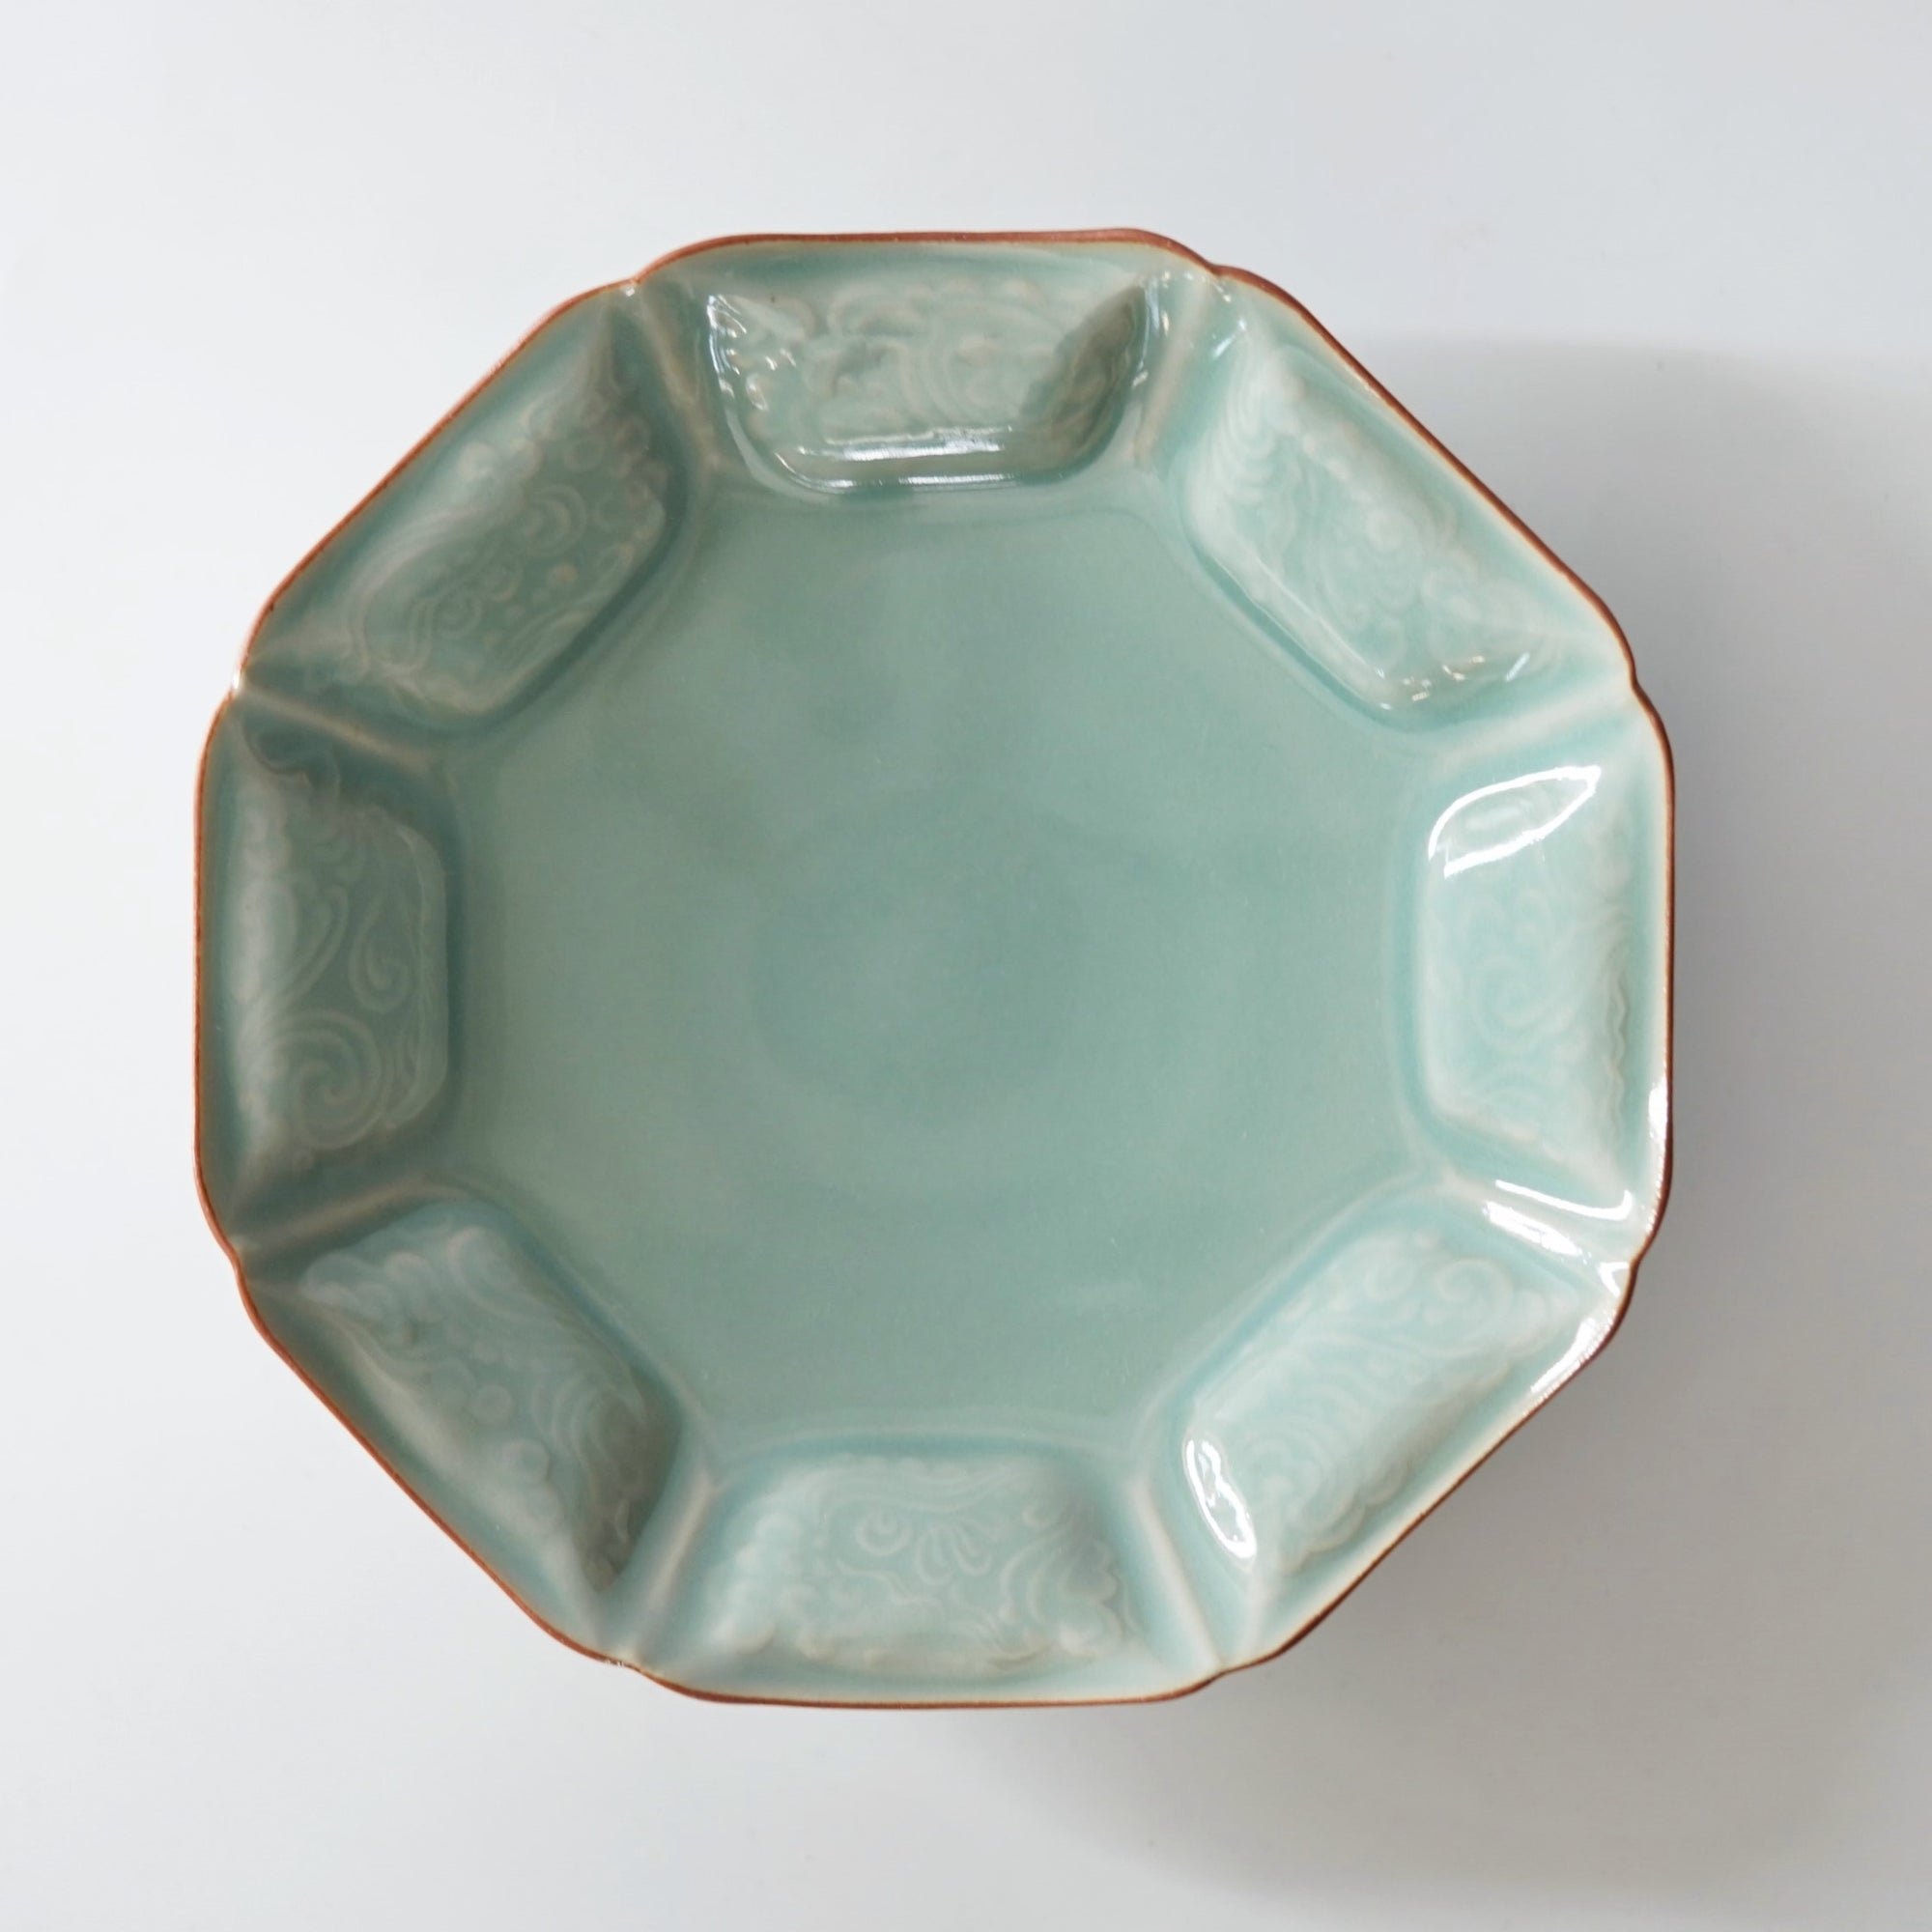 【Hirokazu Kato】Flower-patterned Hexagonal celadon bowl